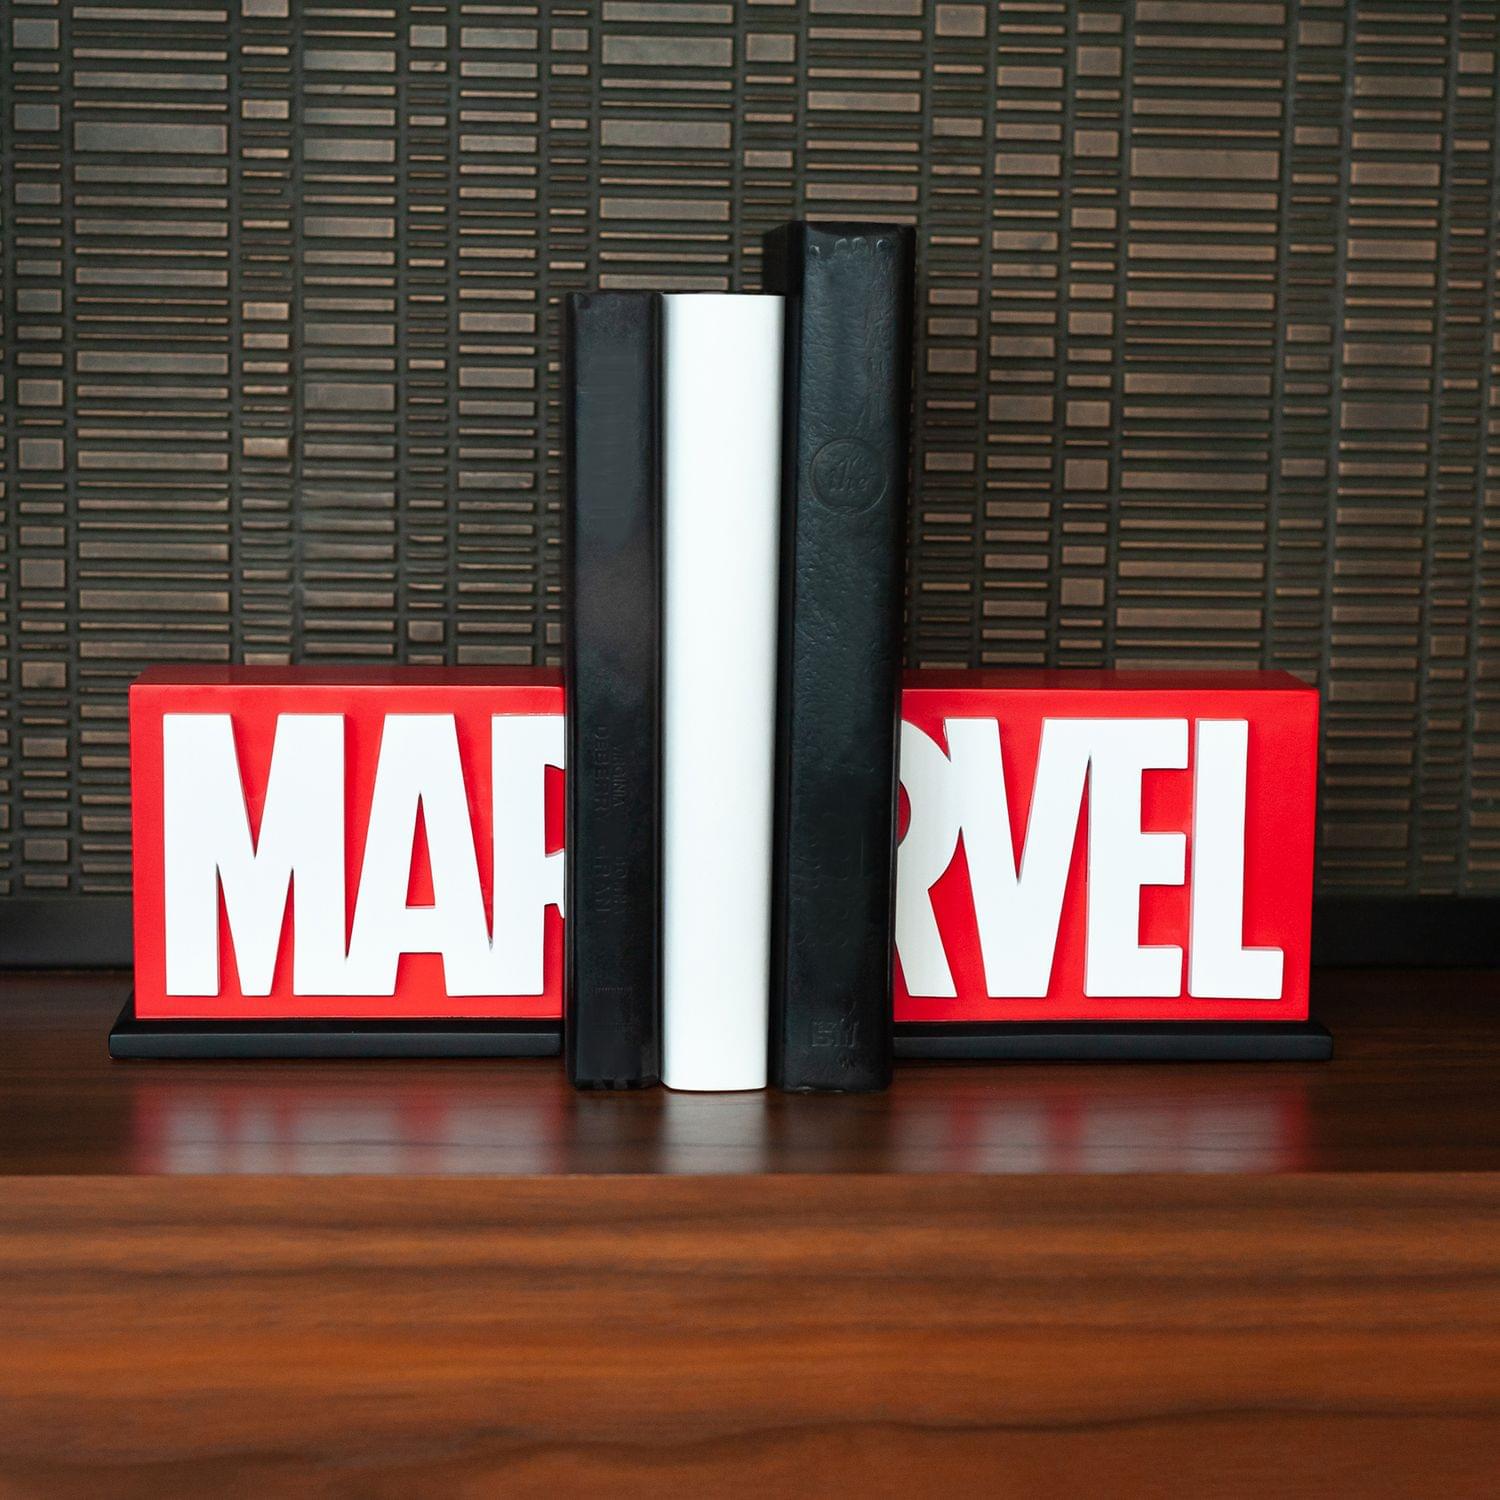 Marvel Logo Bookends | Transform Your Superhero Decor With The Marvel Logo